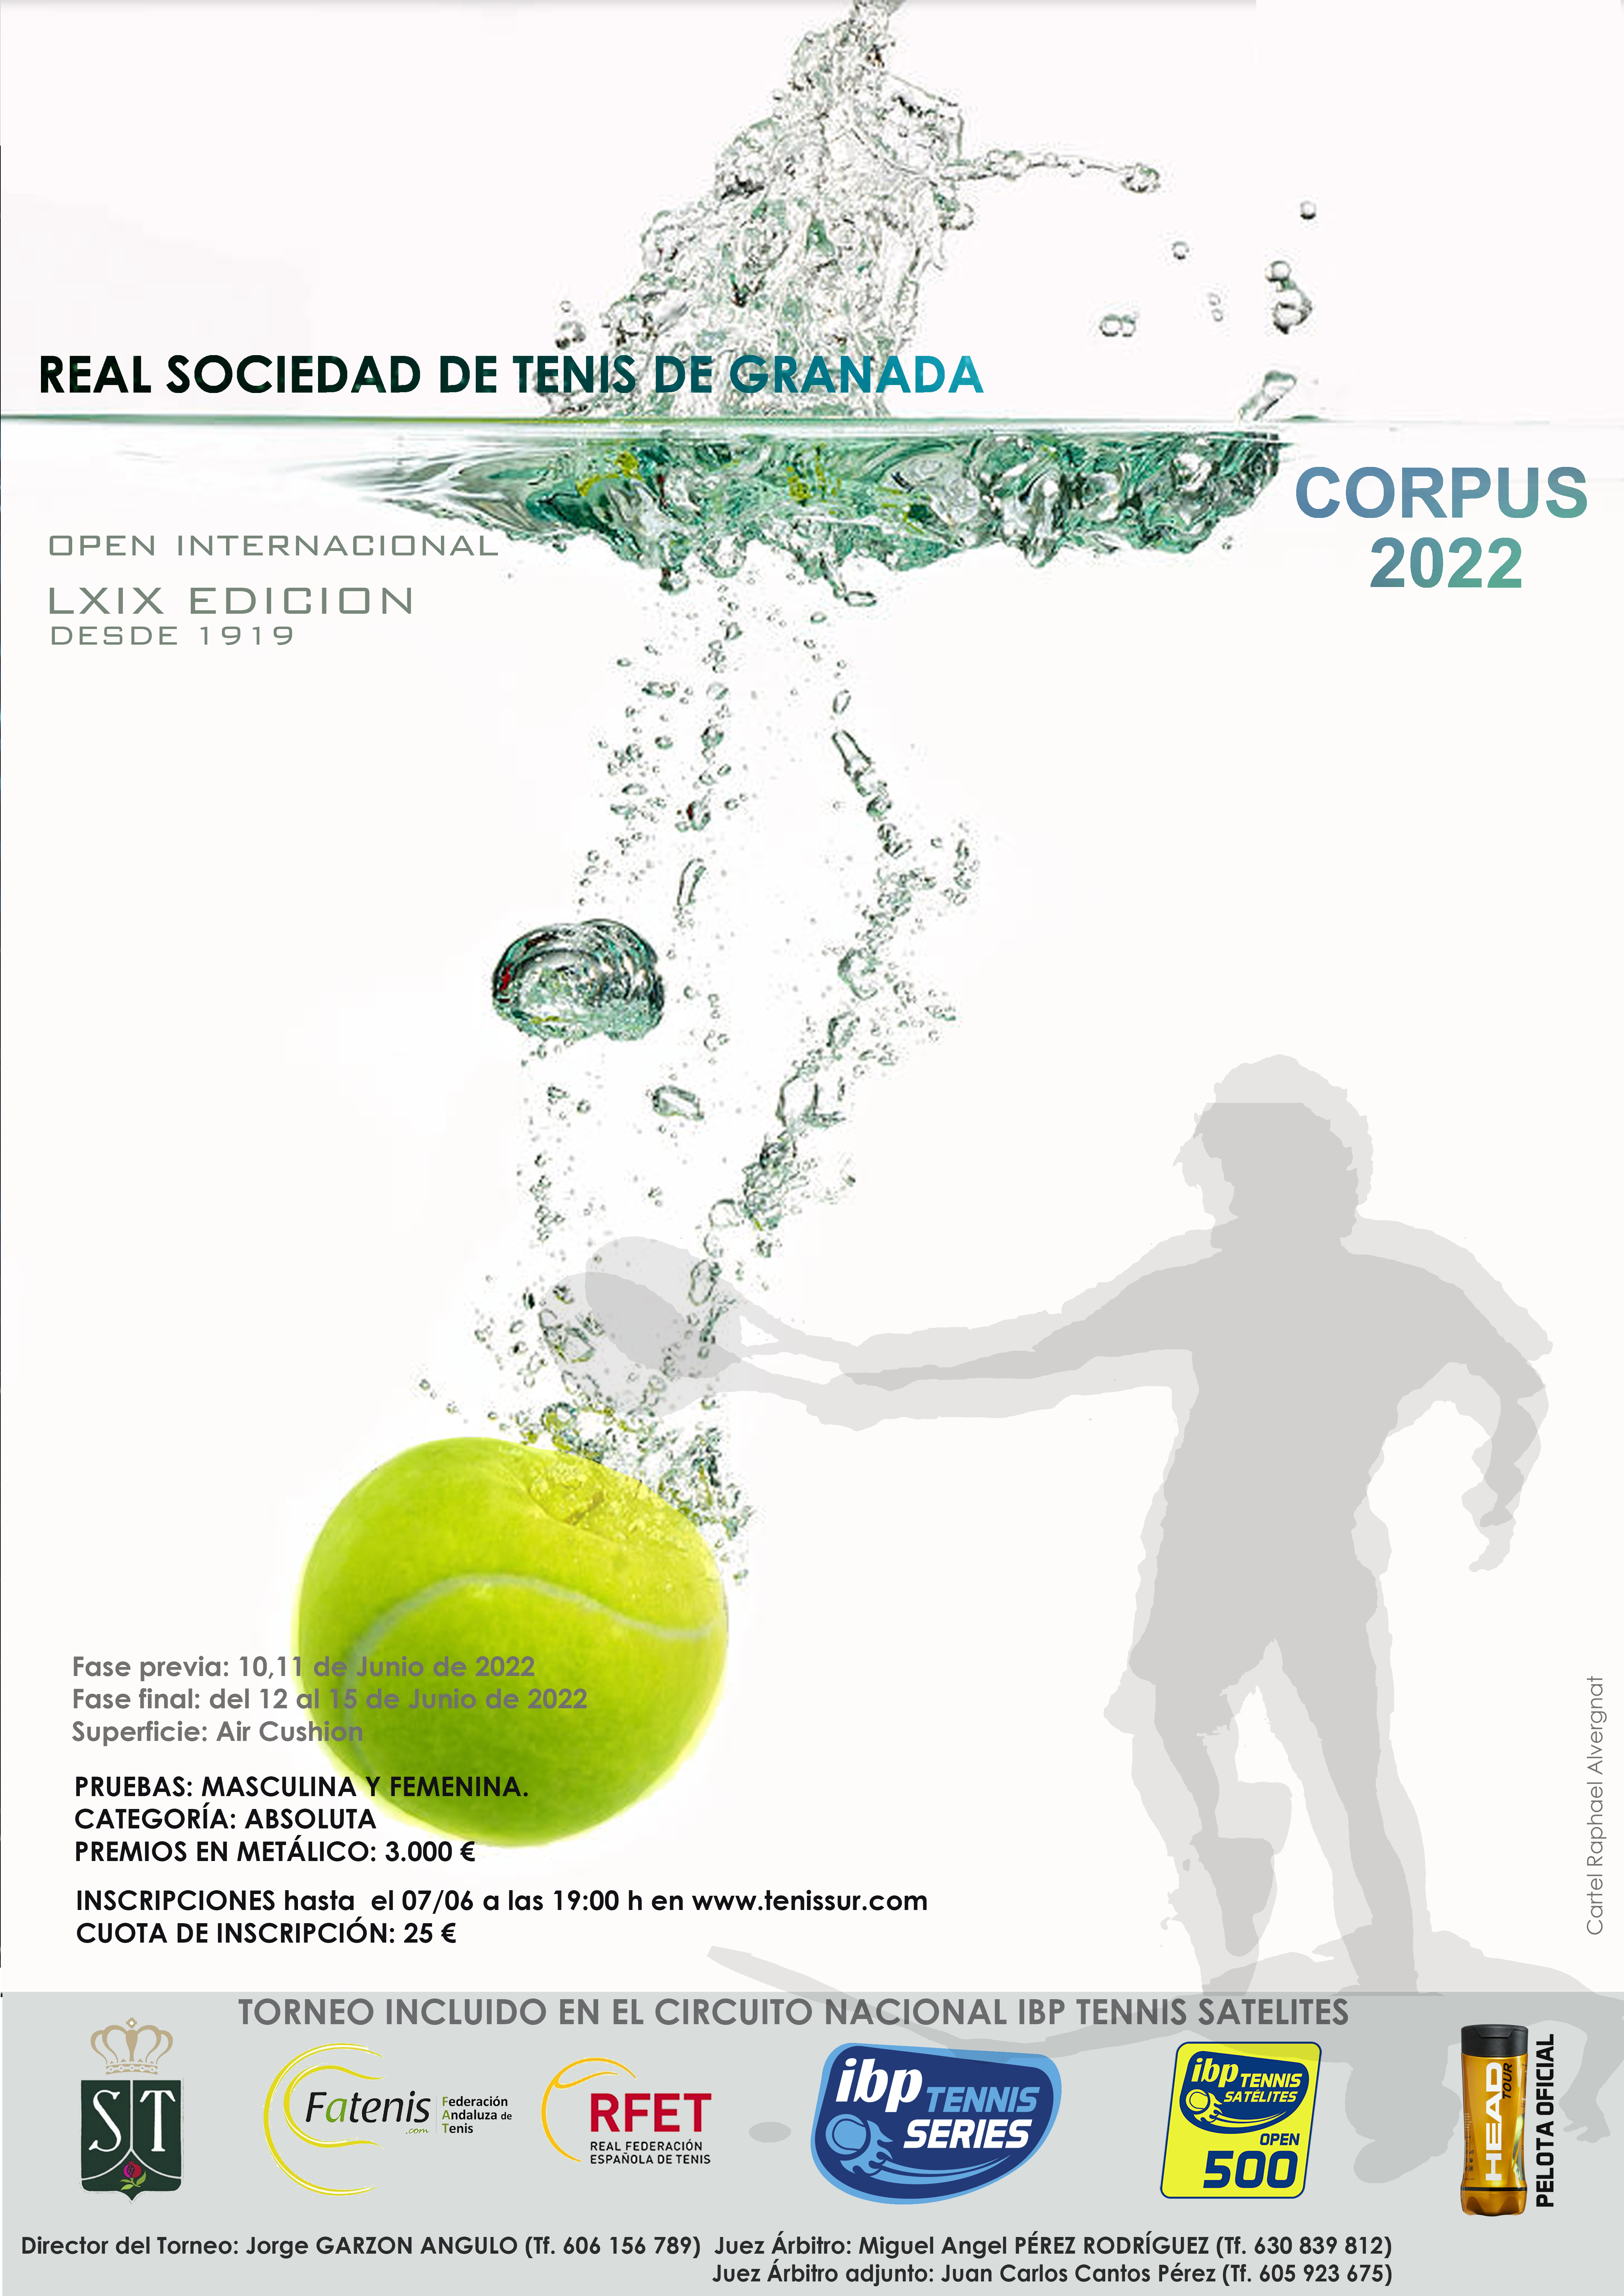 IPB Tour 500 corpus 2022